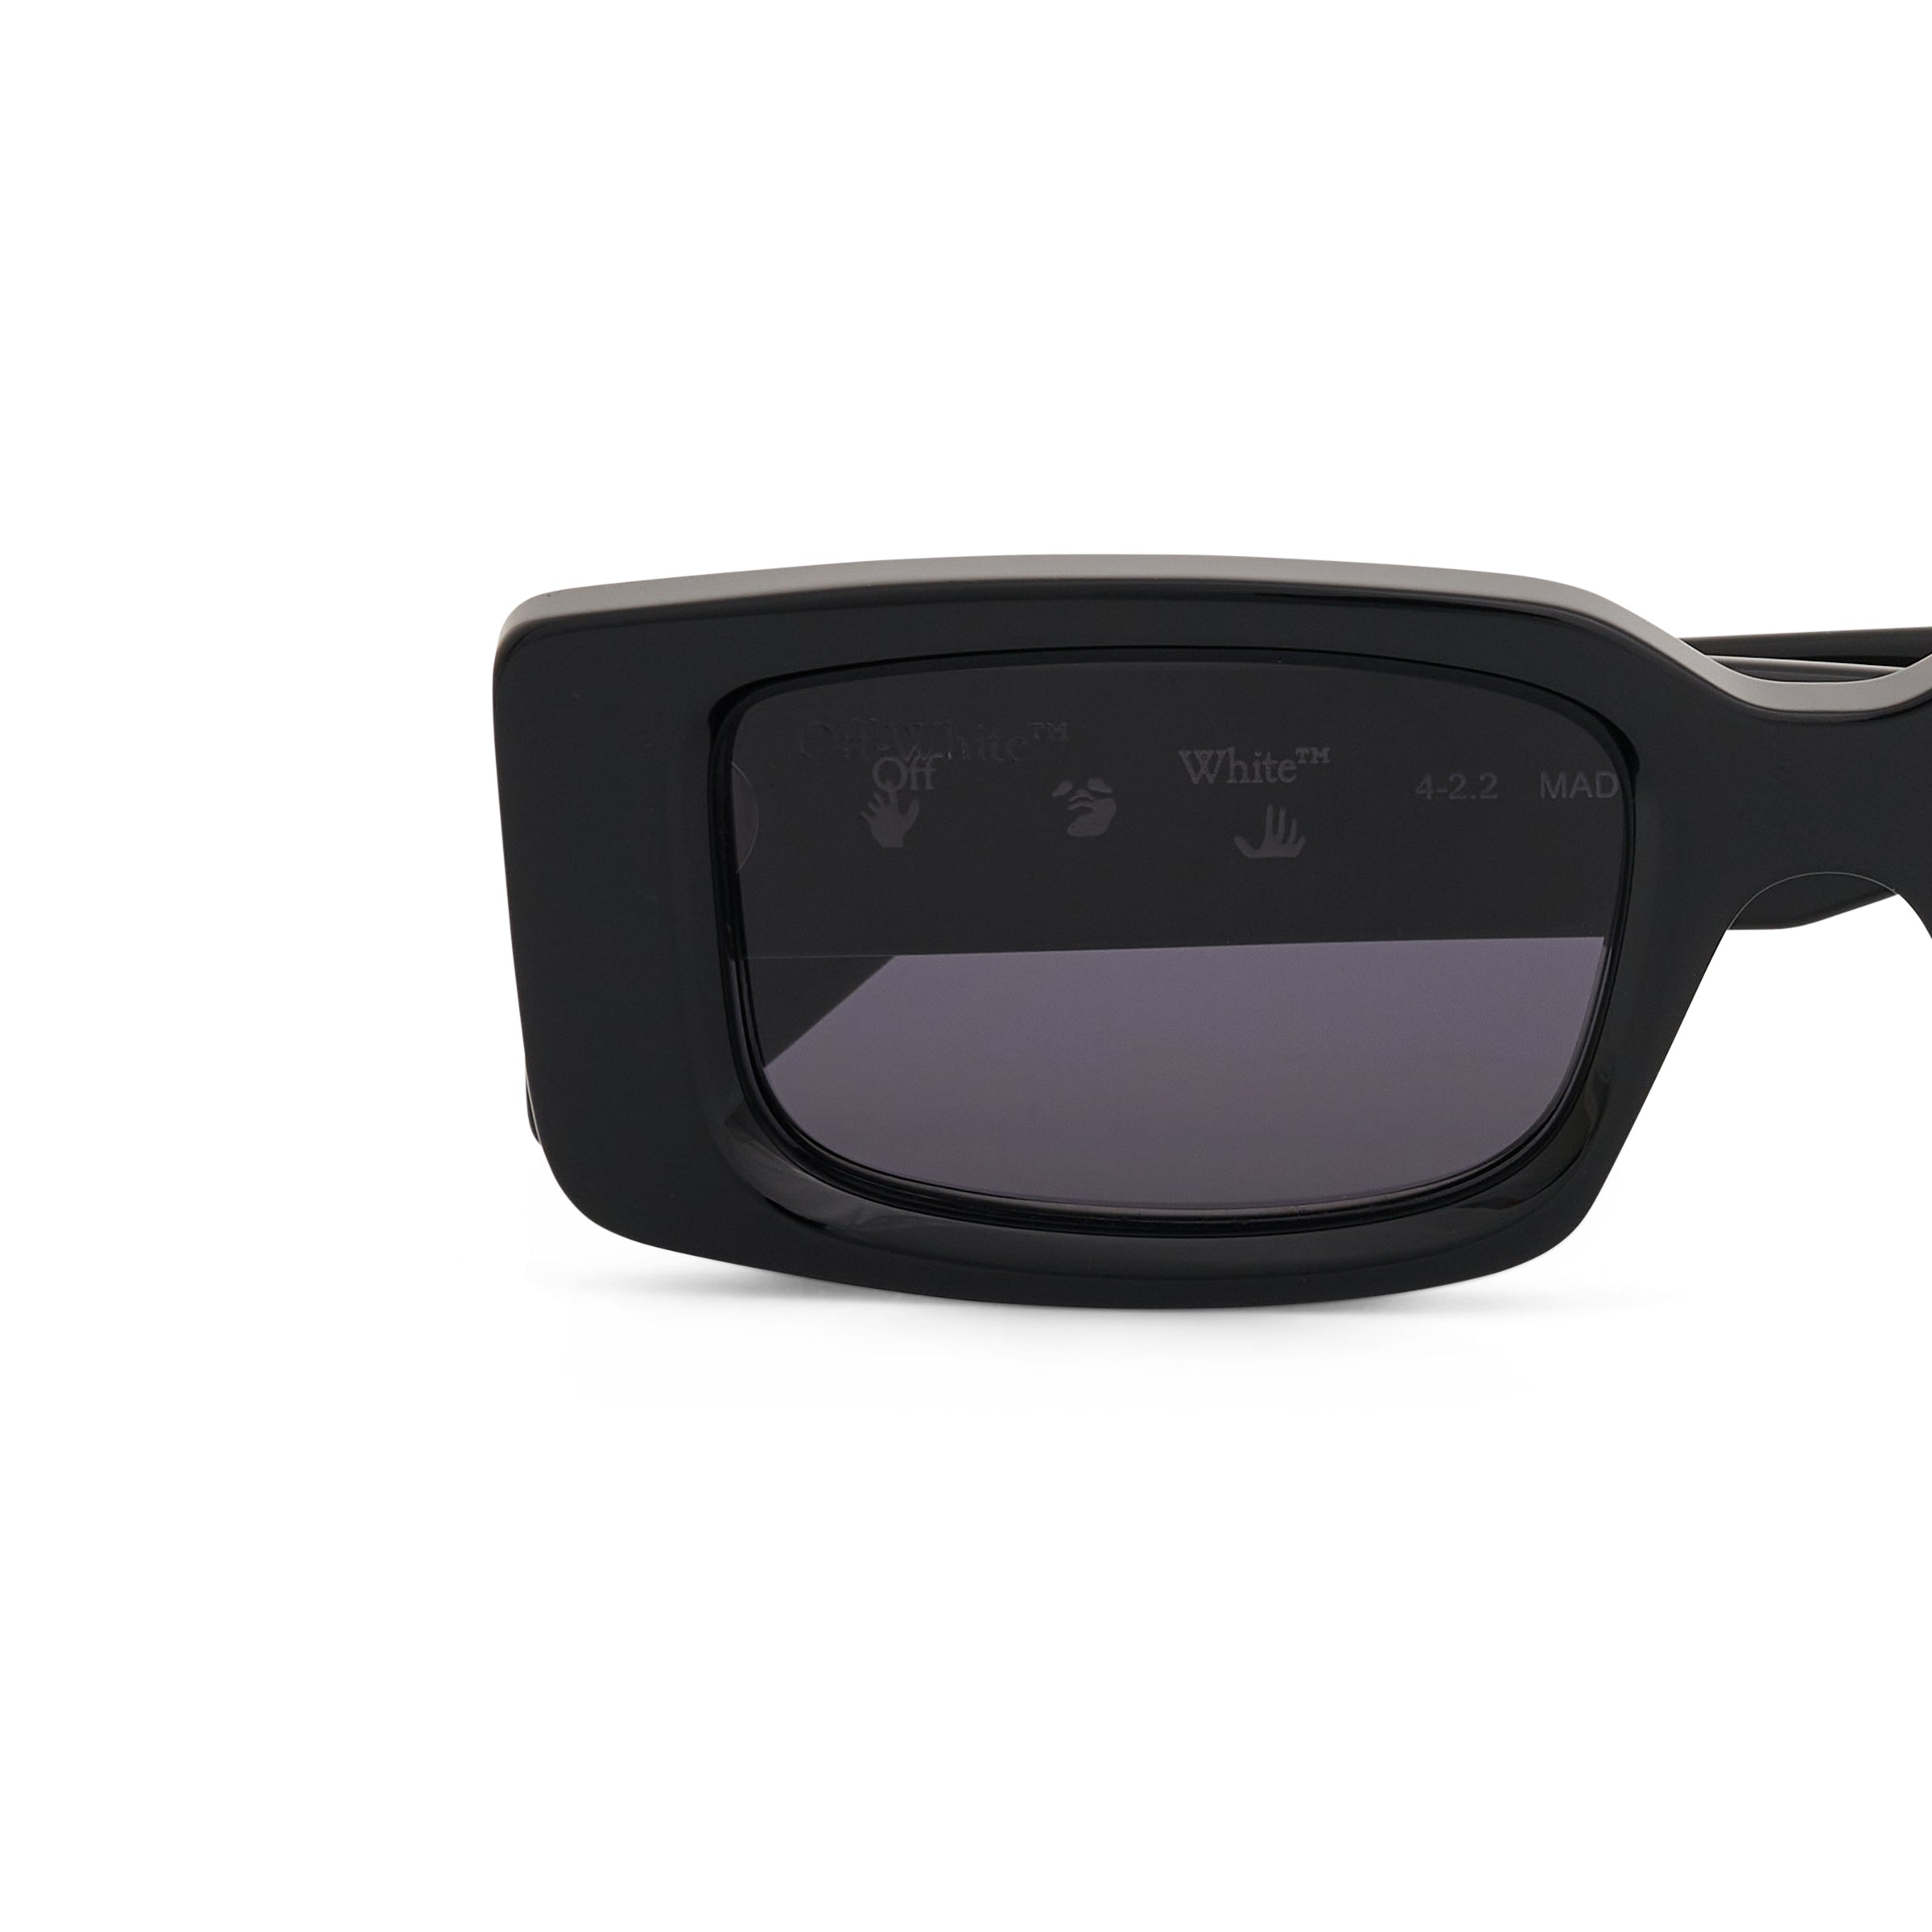 Buy Off-White Arthur Sunglasses 'Black/Dark Grey' - OERI016C99PLA0011007